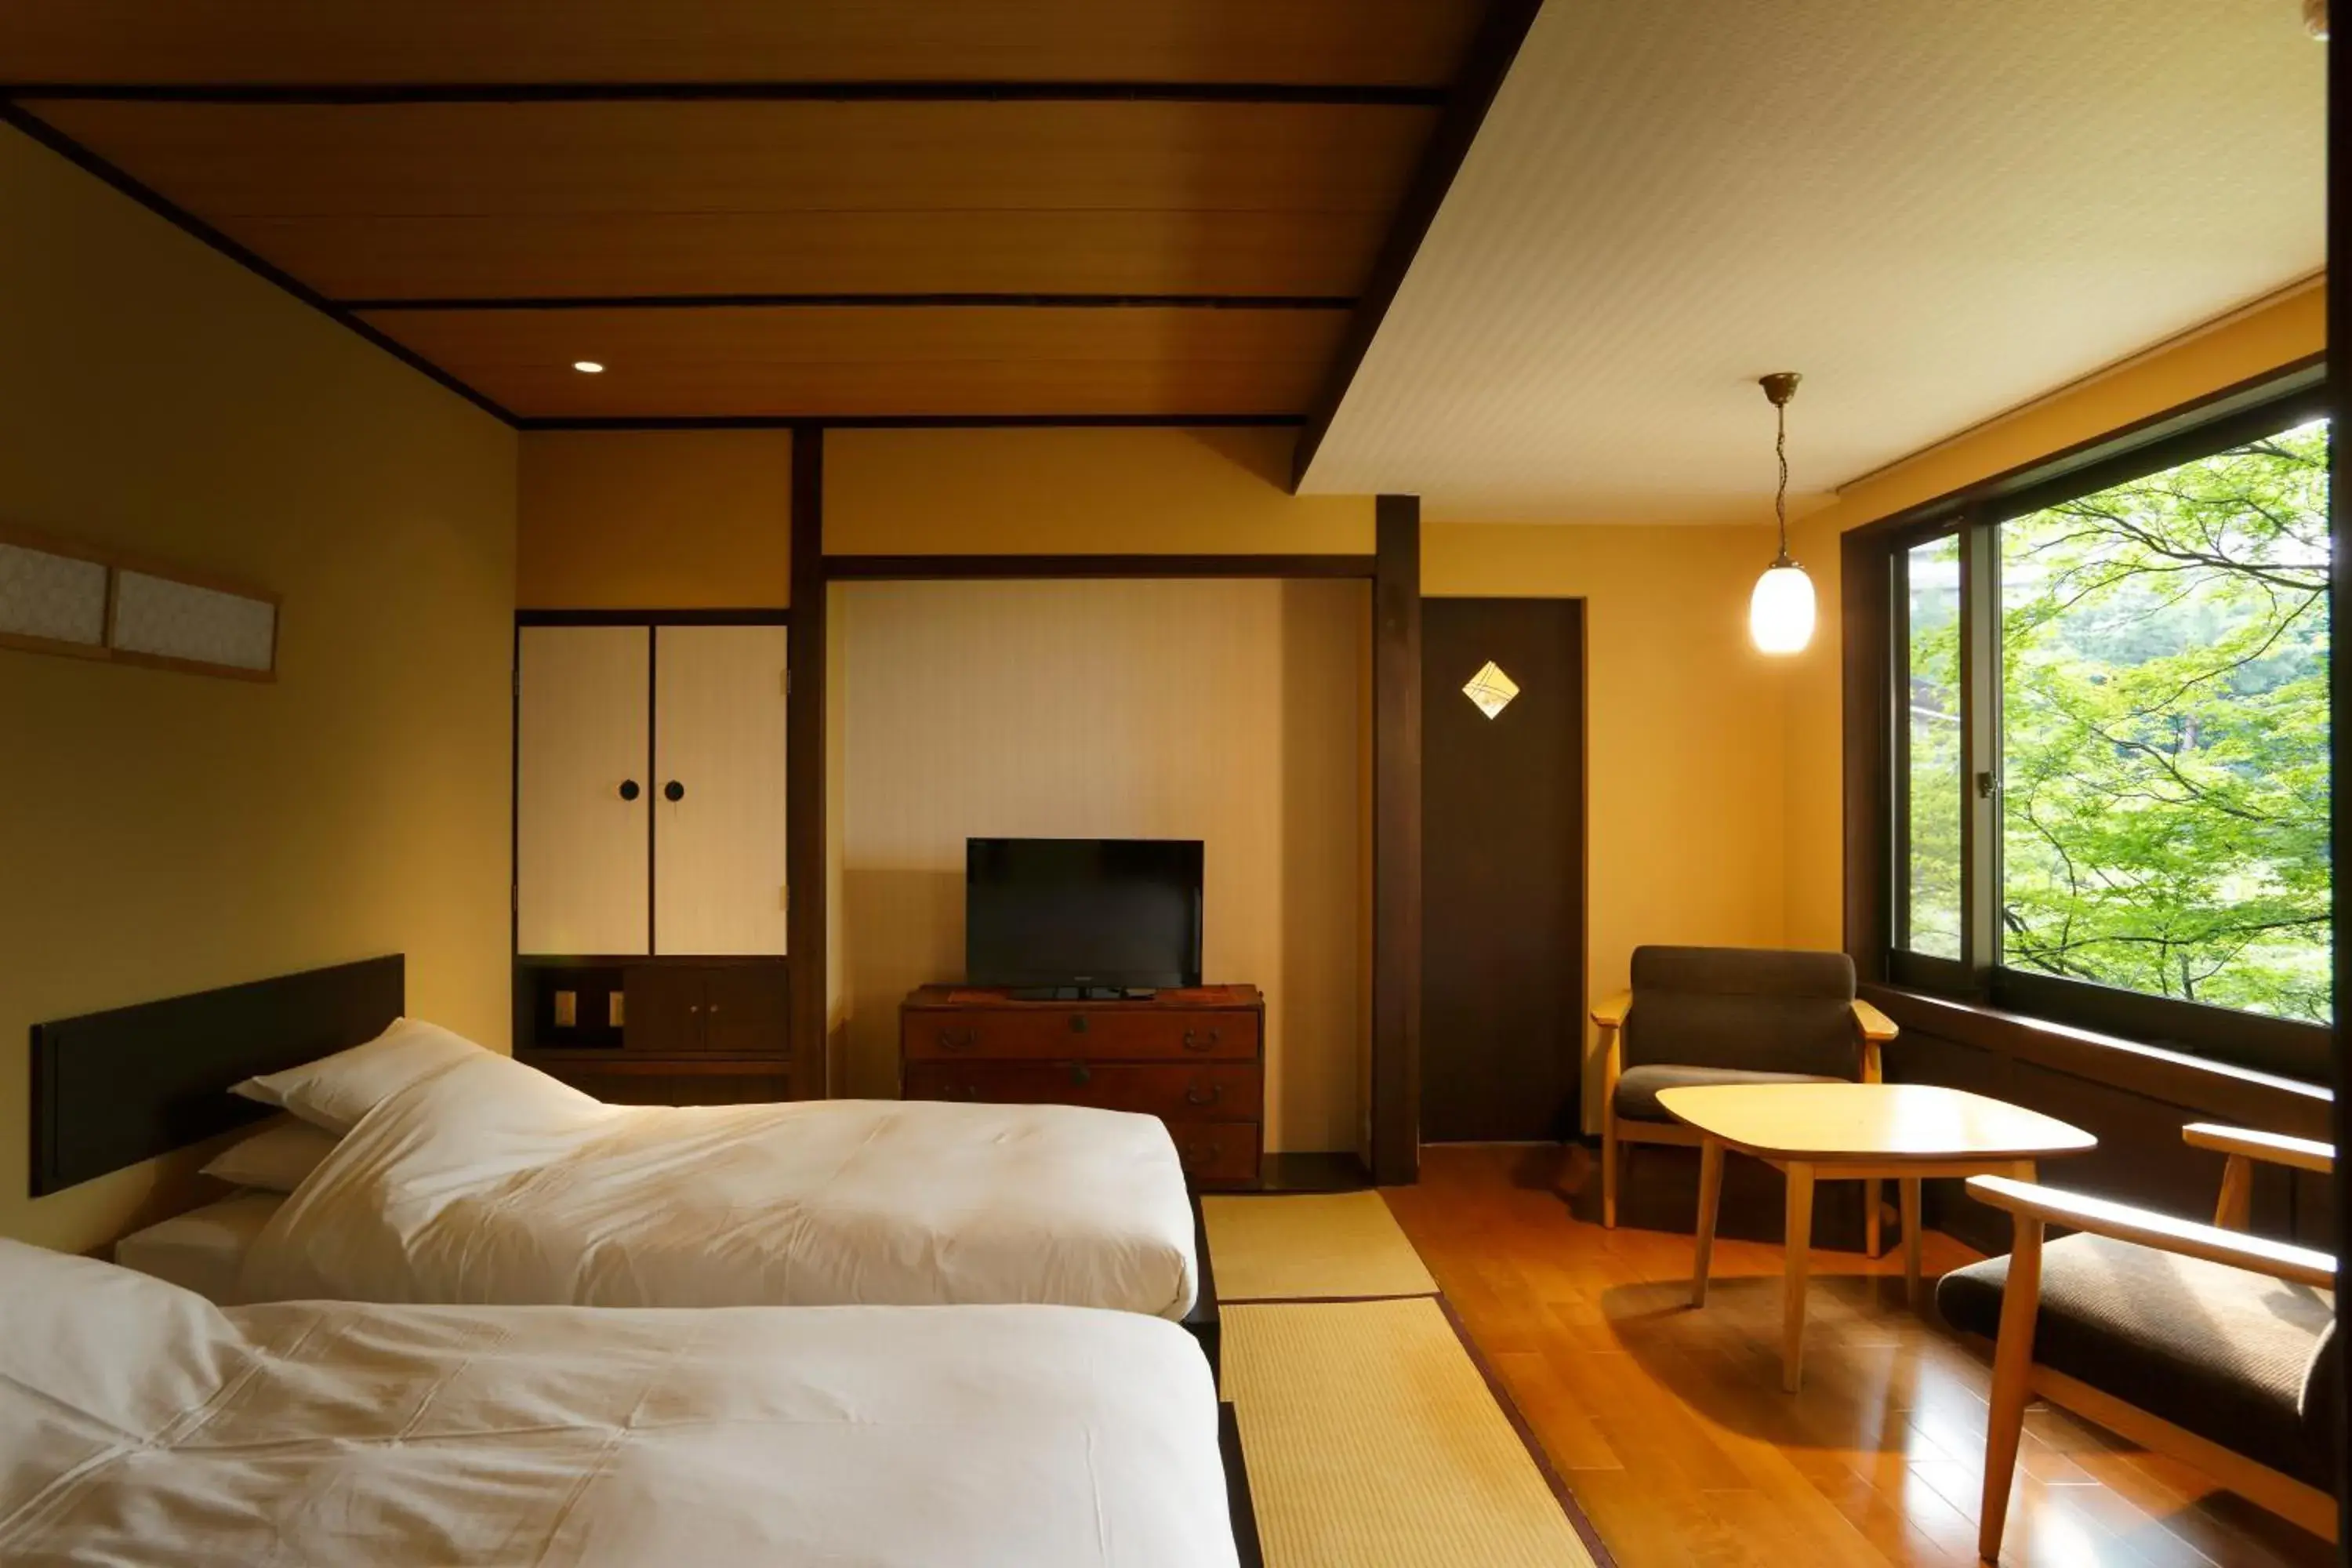 Twin Room with Shower - single occupancy - Non-Smoking in Negiya Ryofukaku